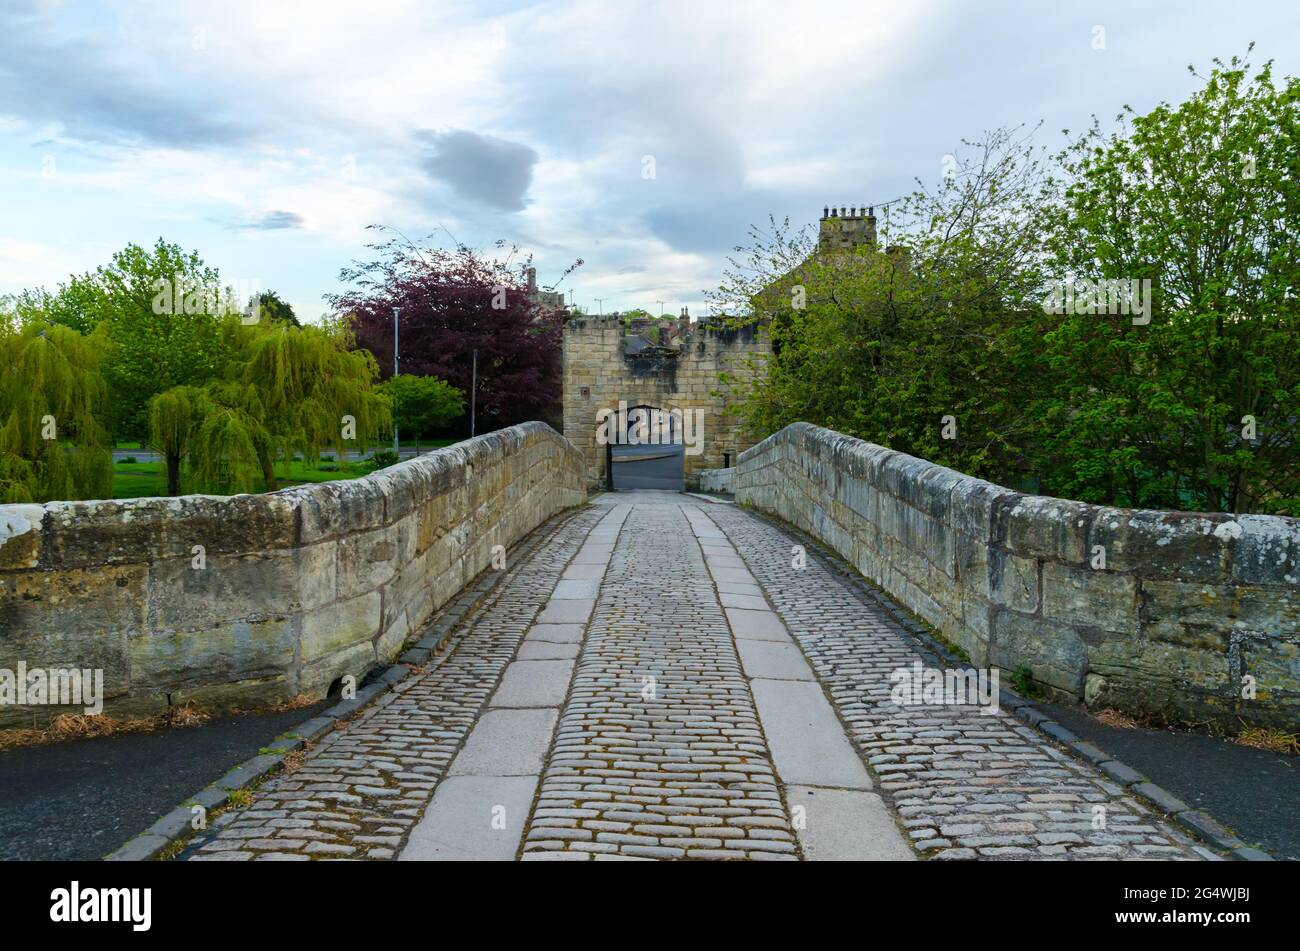 The Cobbled Bridge Deck of Warkworth Medieval Brudge at Warkworth, Northumberland Stock Photo